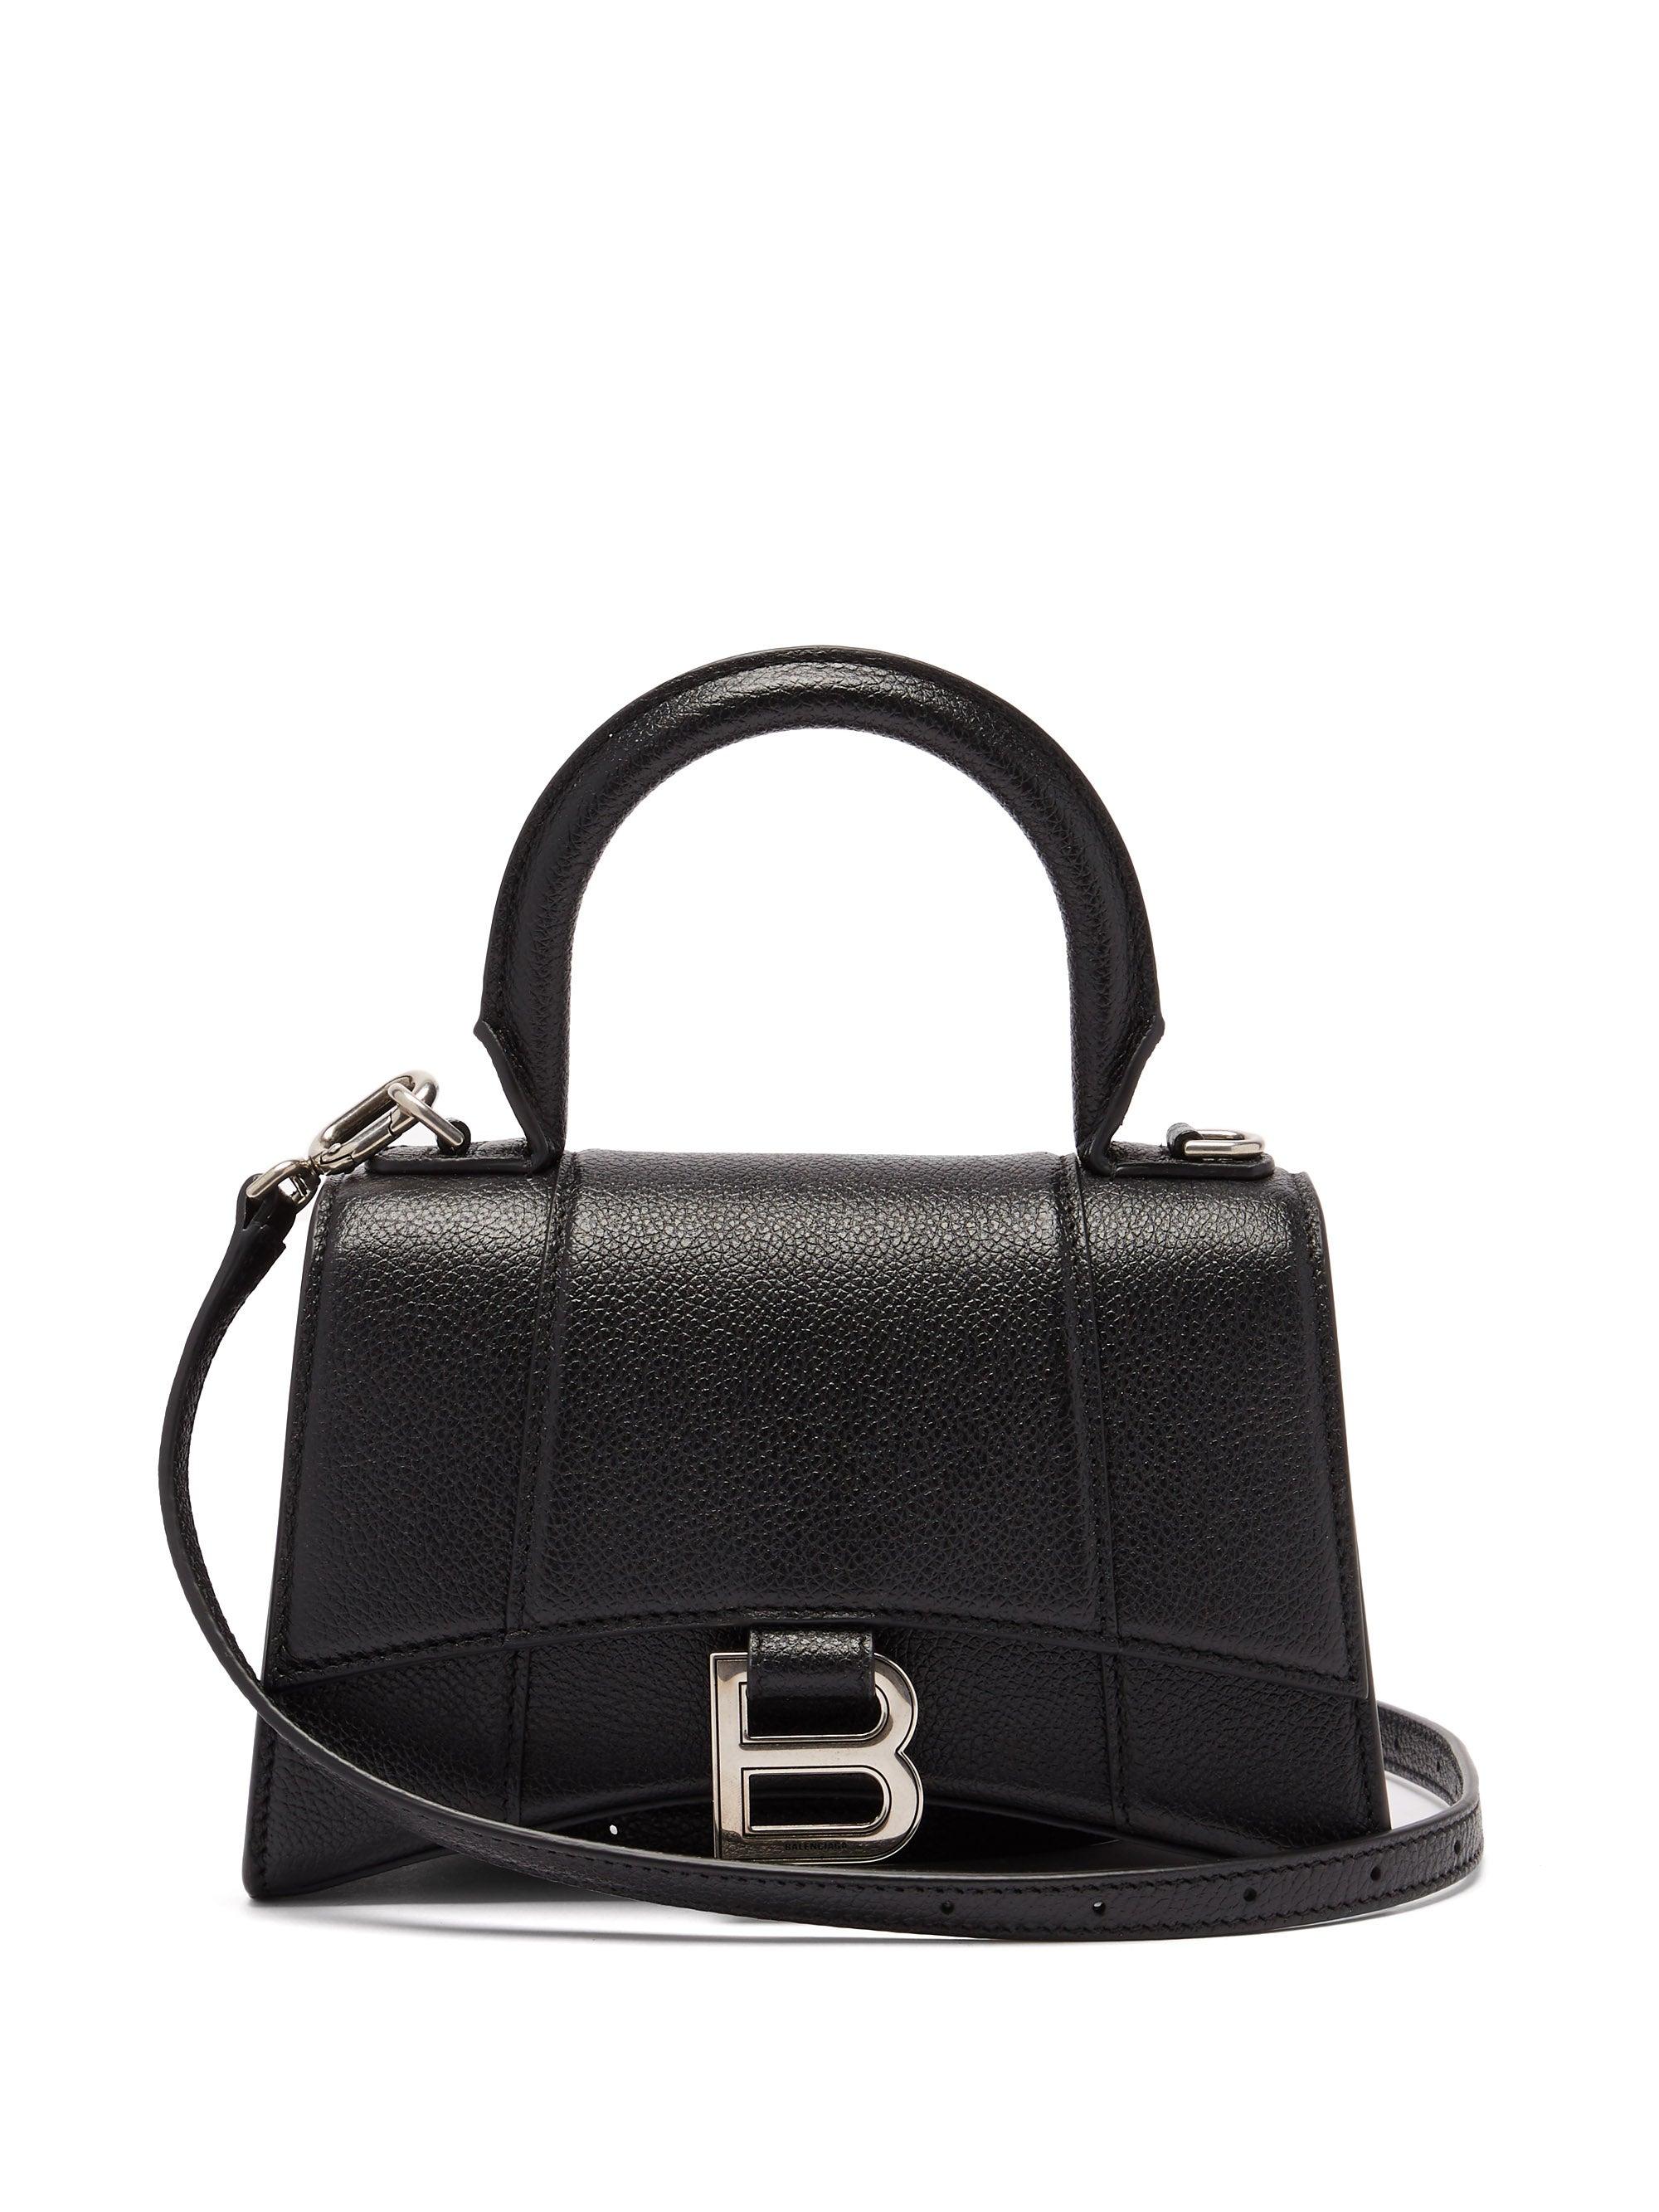 Balenciaga Black Handbag | Literacy Basics